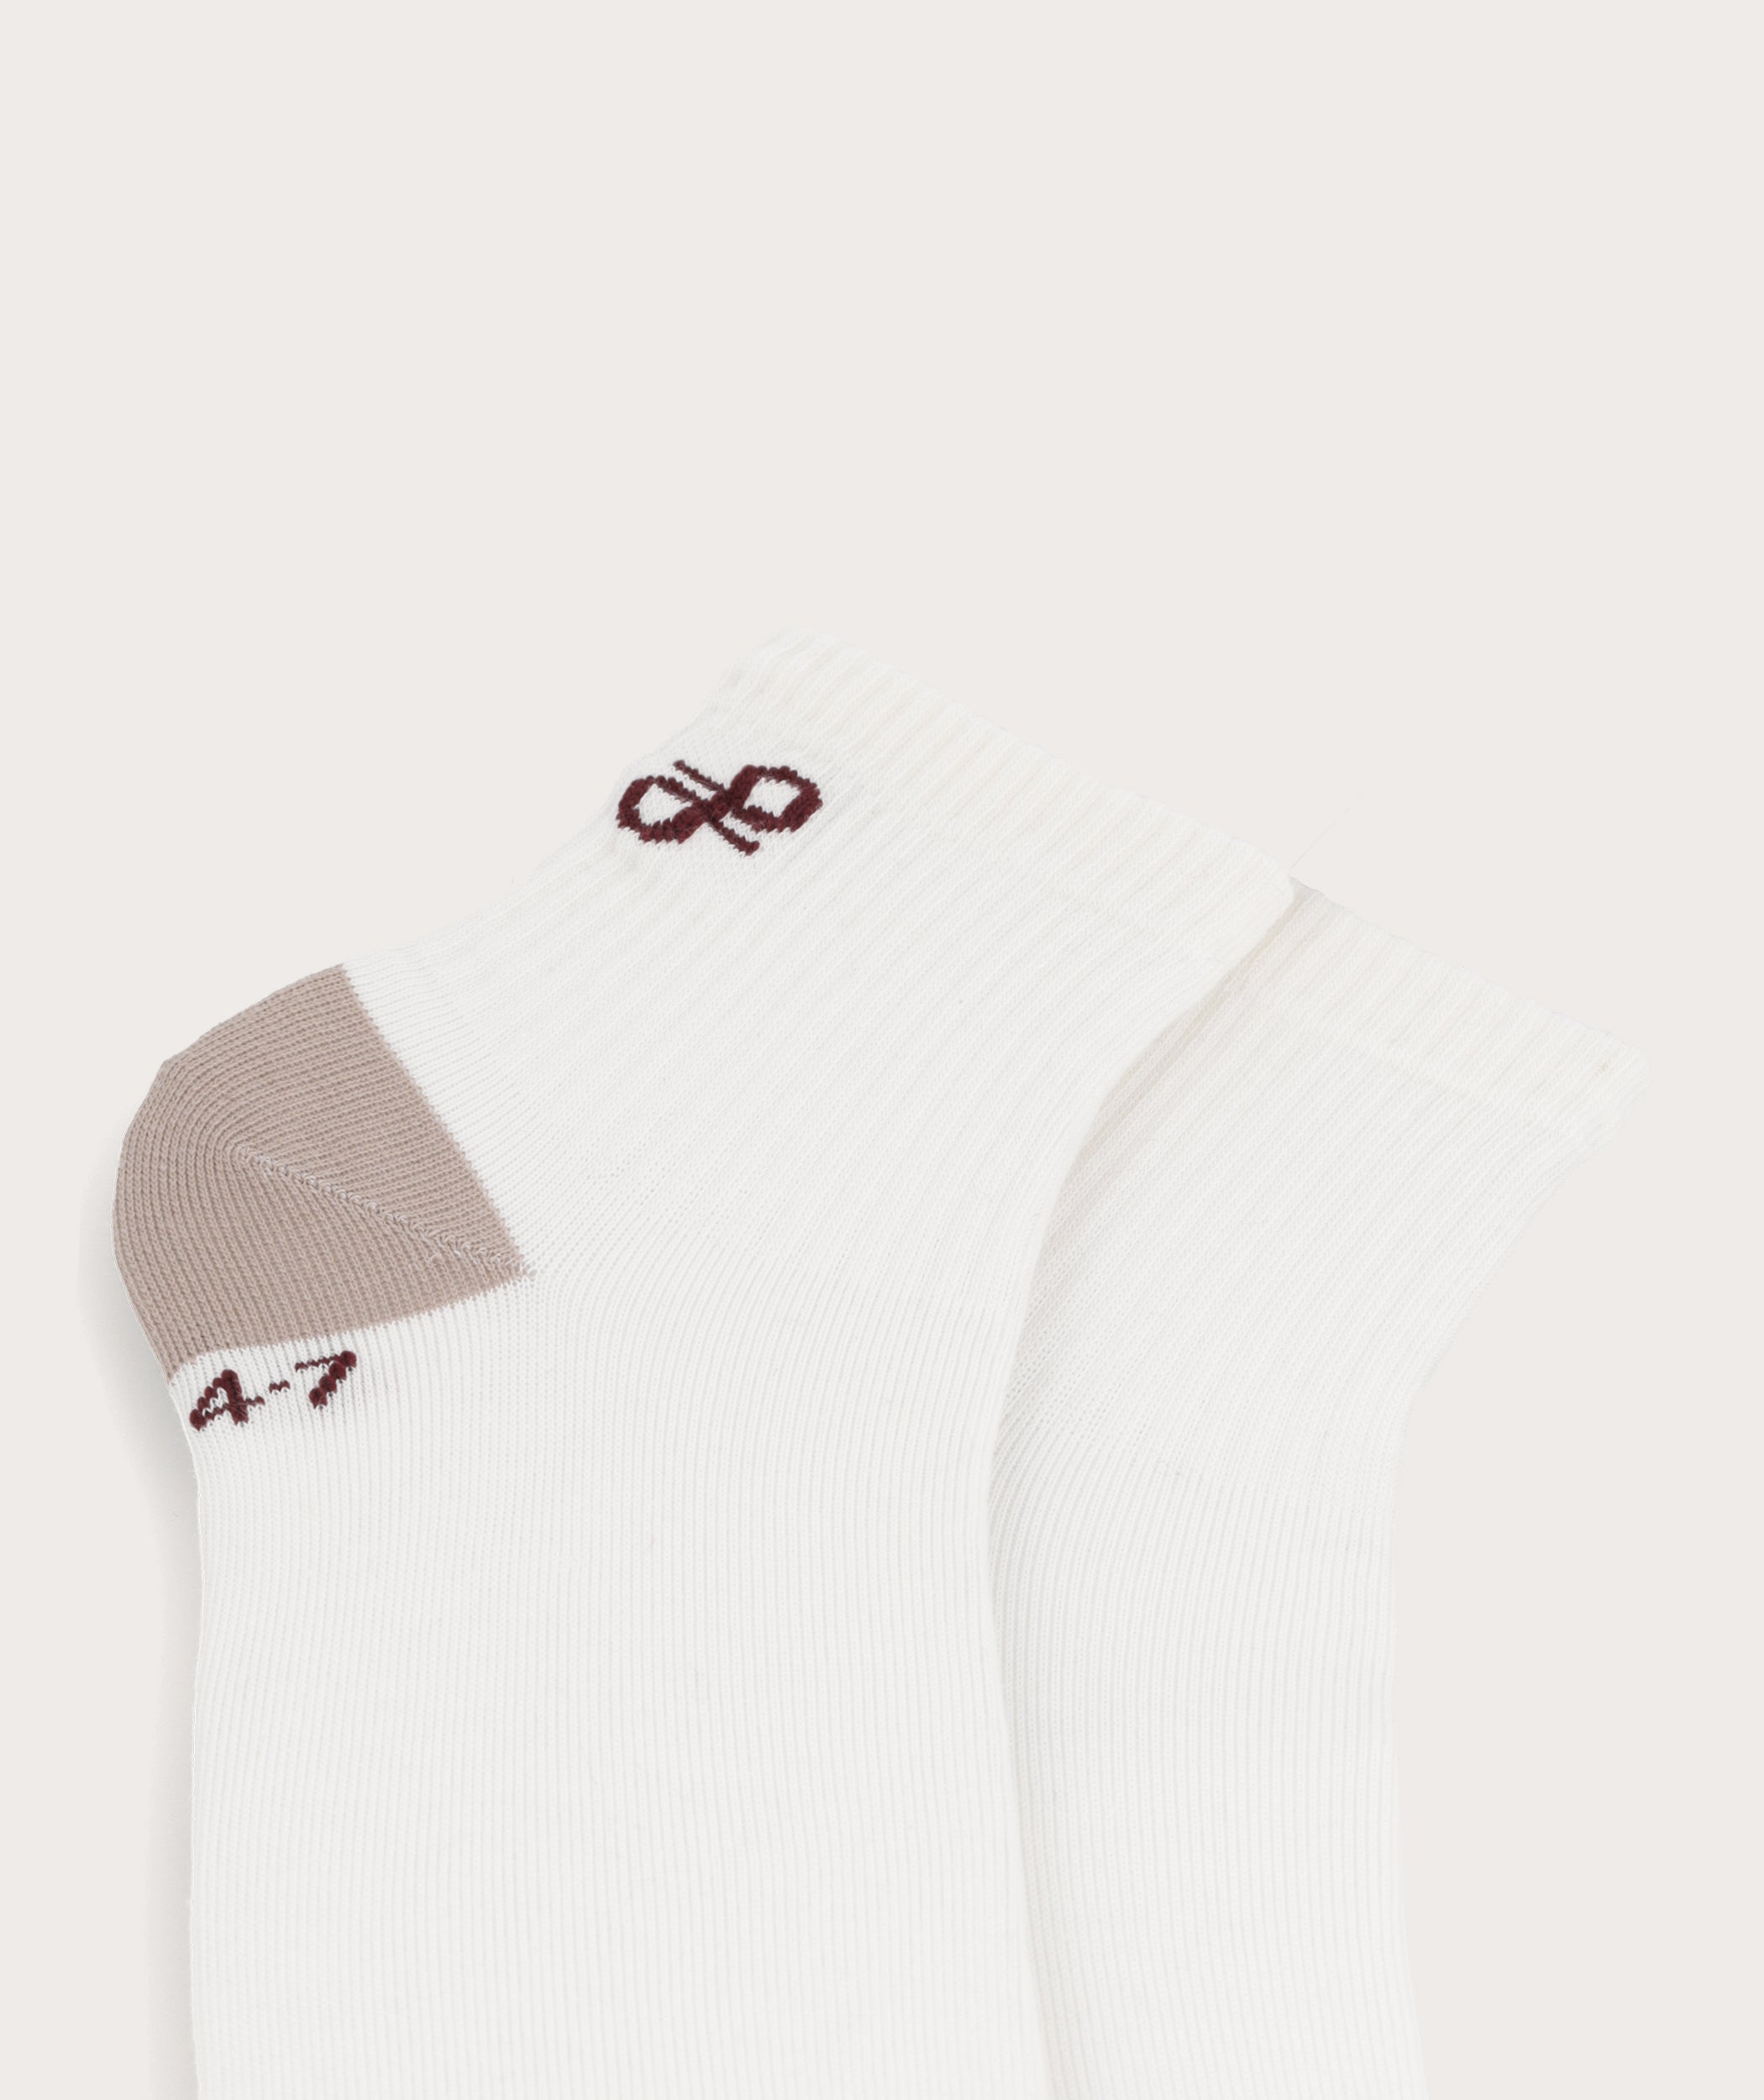 Socks FOM Active - Cream & Stone (Size 4-7)